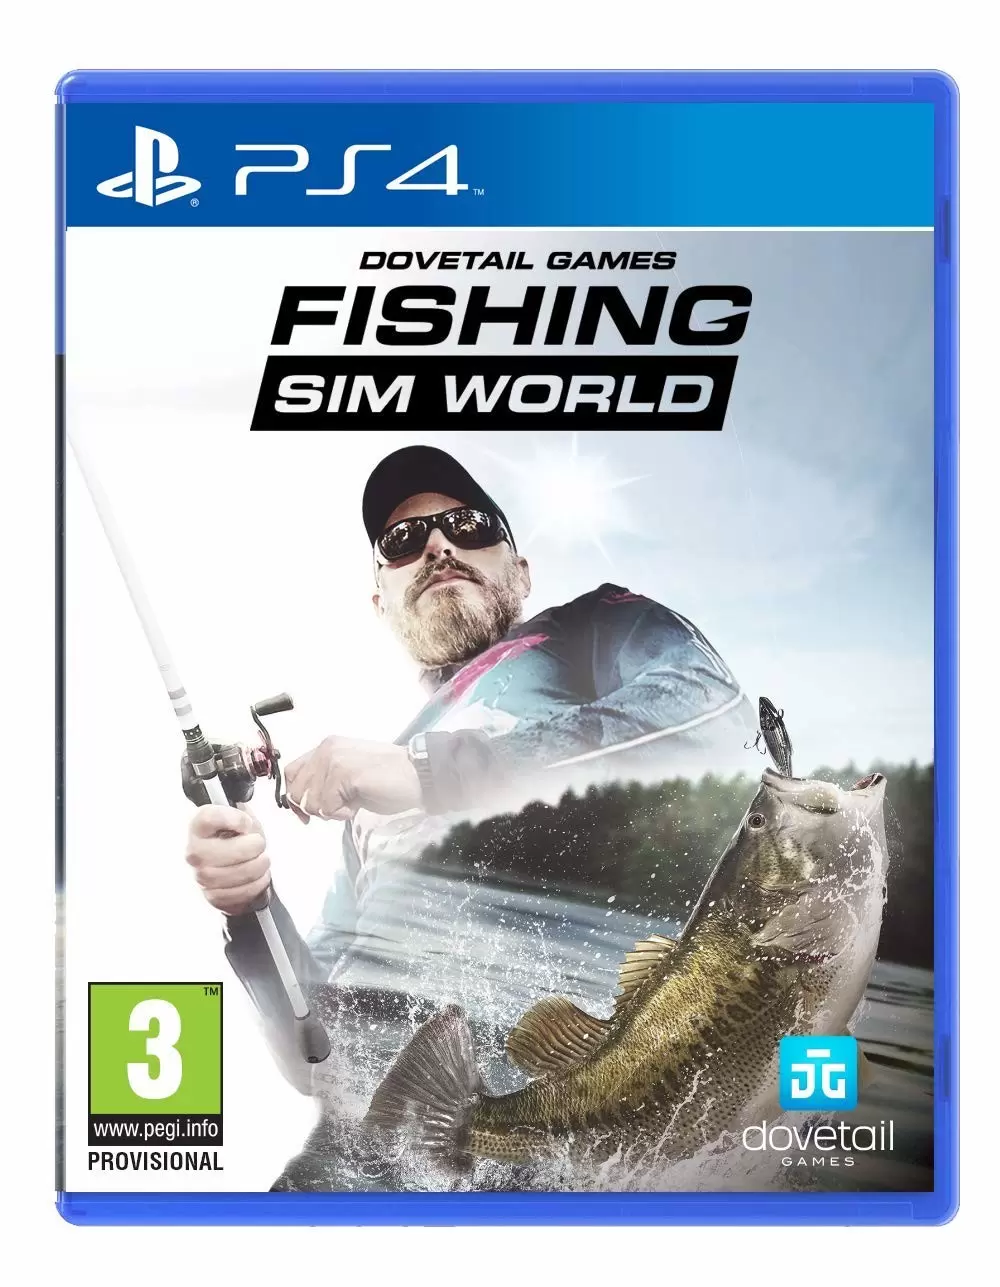 PS4 Games - Fishing Sim World